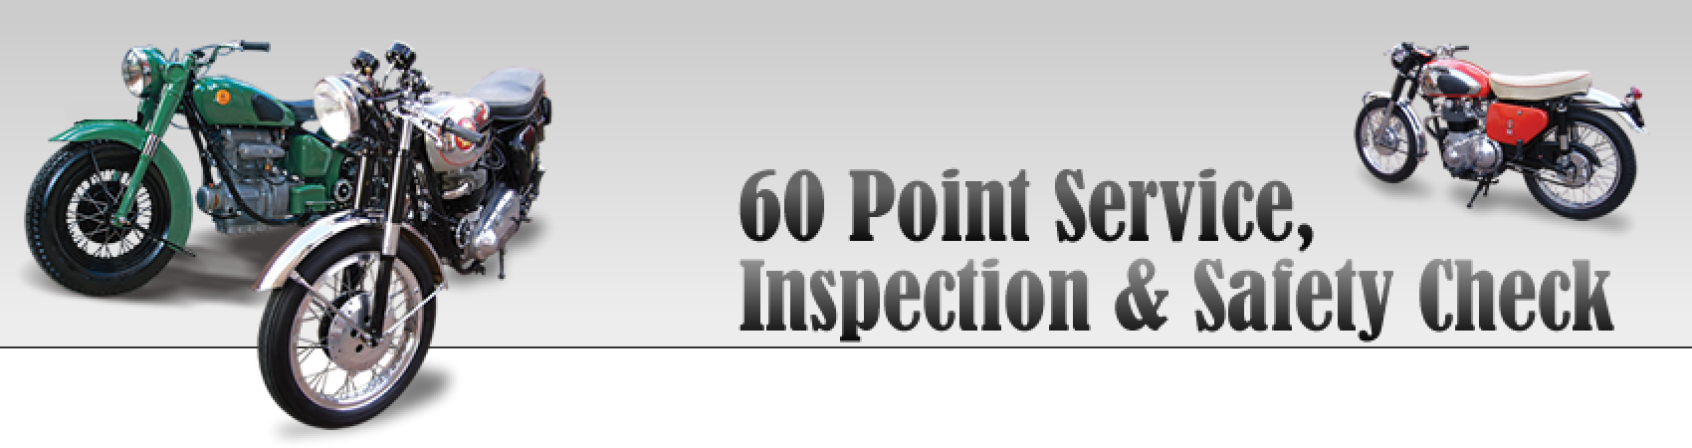 60 Point Service, Inspection & Safety Check